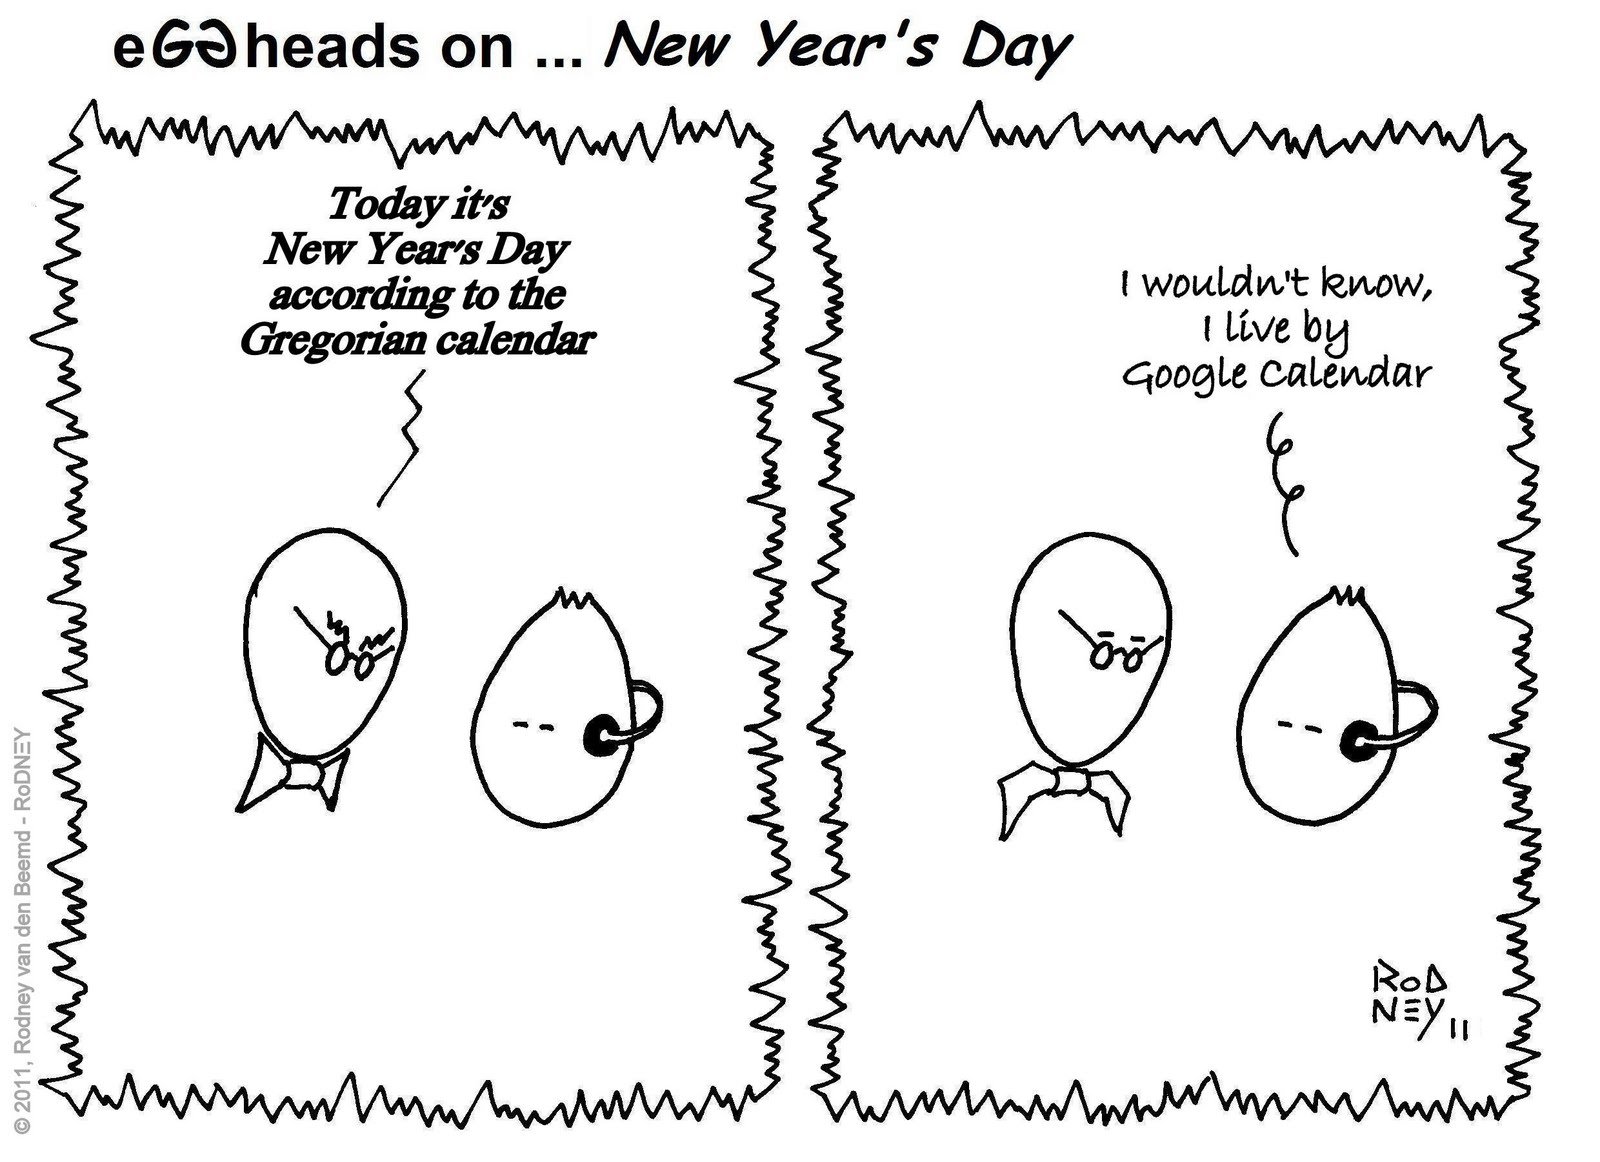 eGGheads+on+New+Year%2527s+Day.jpg